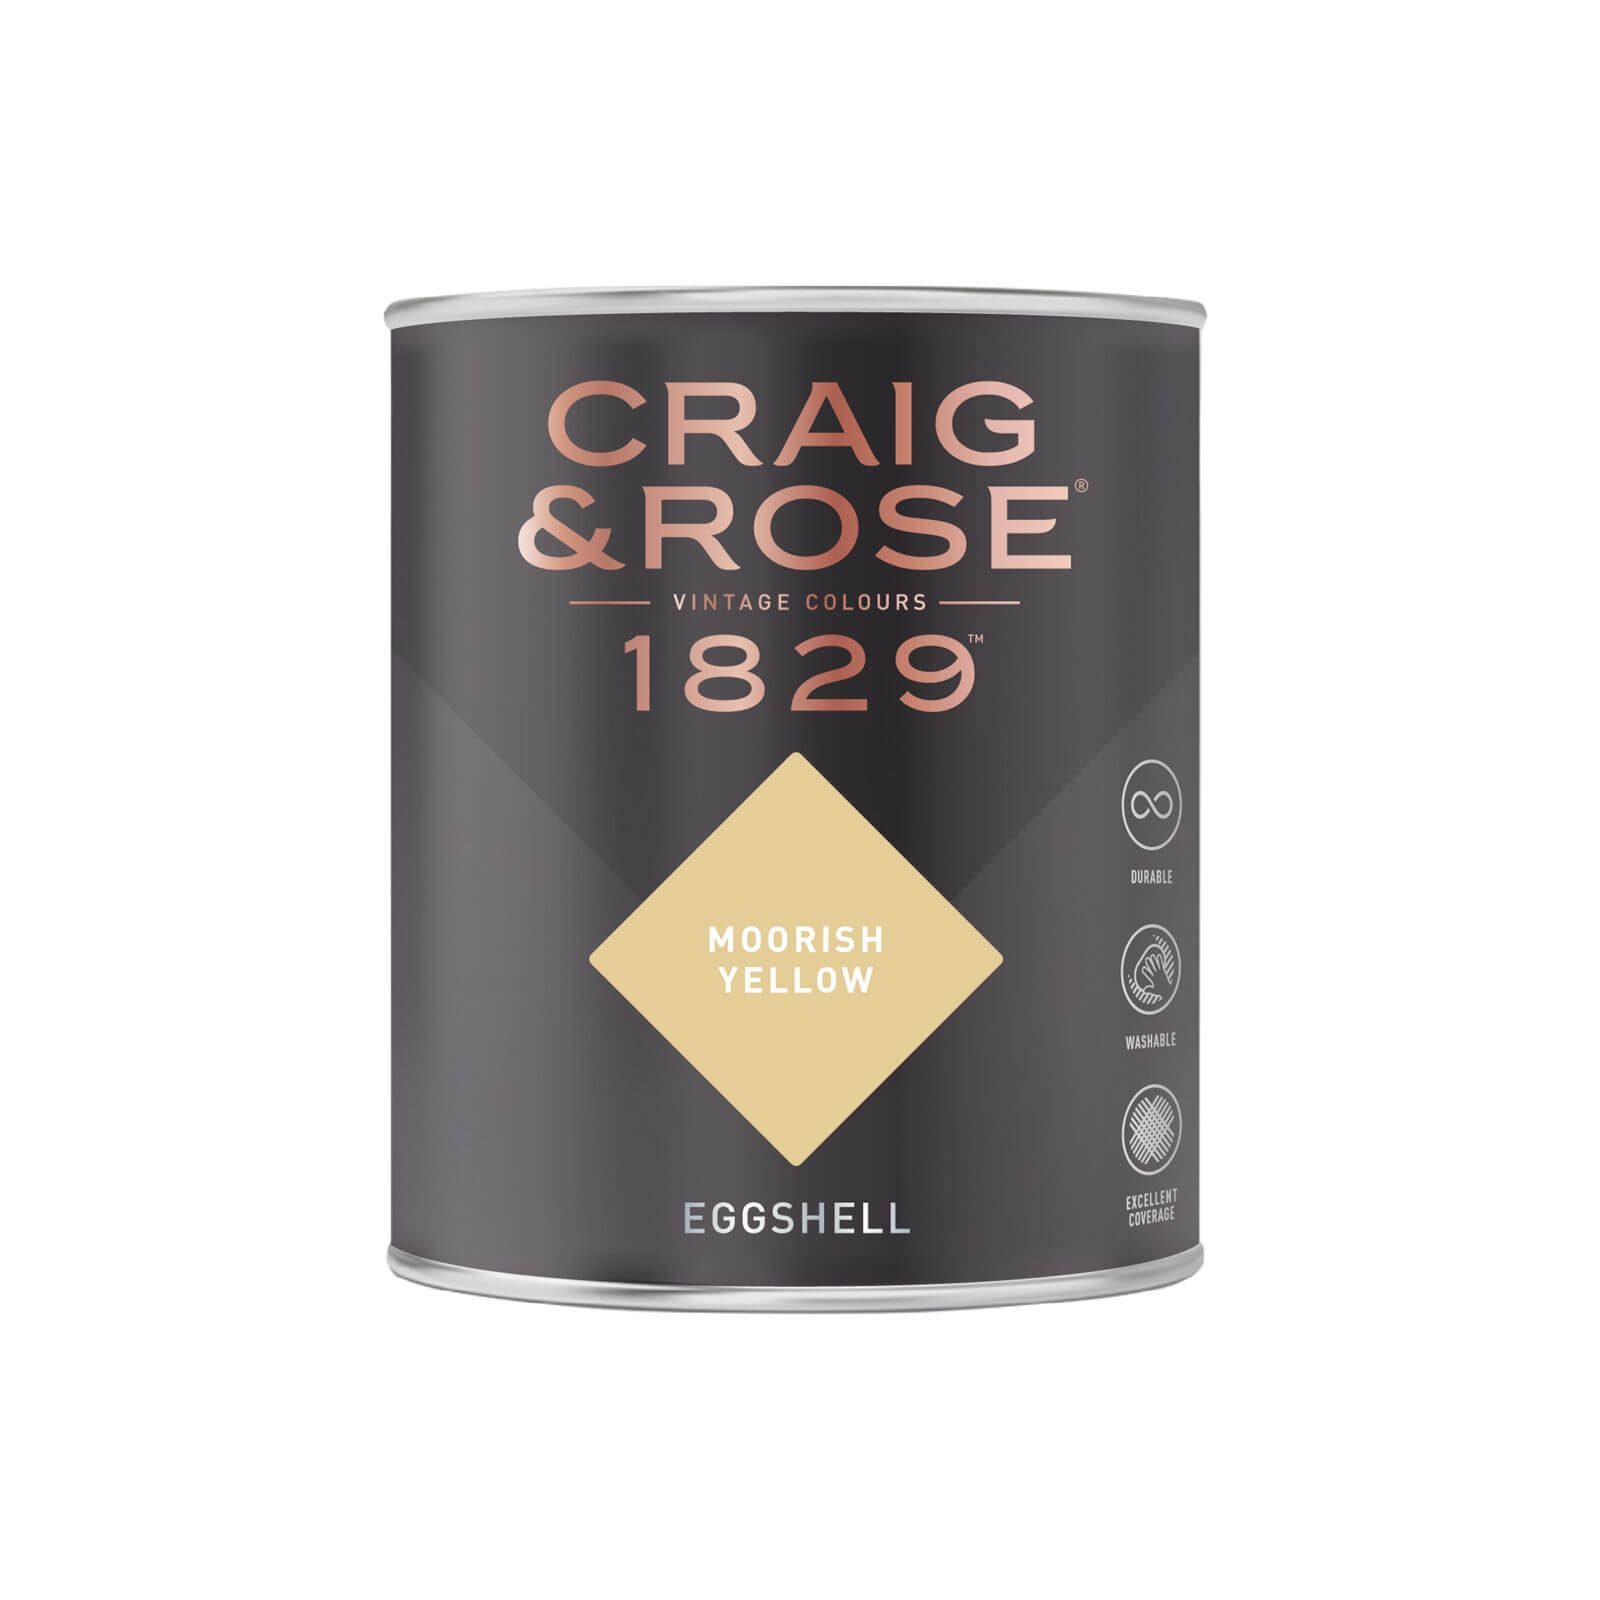 Craig & Rose 1829 Eggshell Paint Moorish Yellow - 750ml